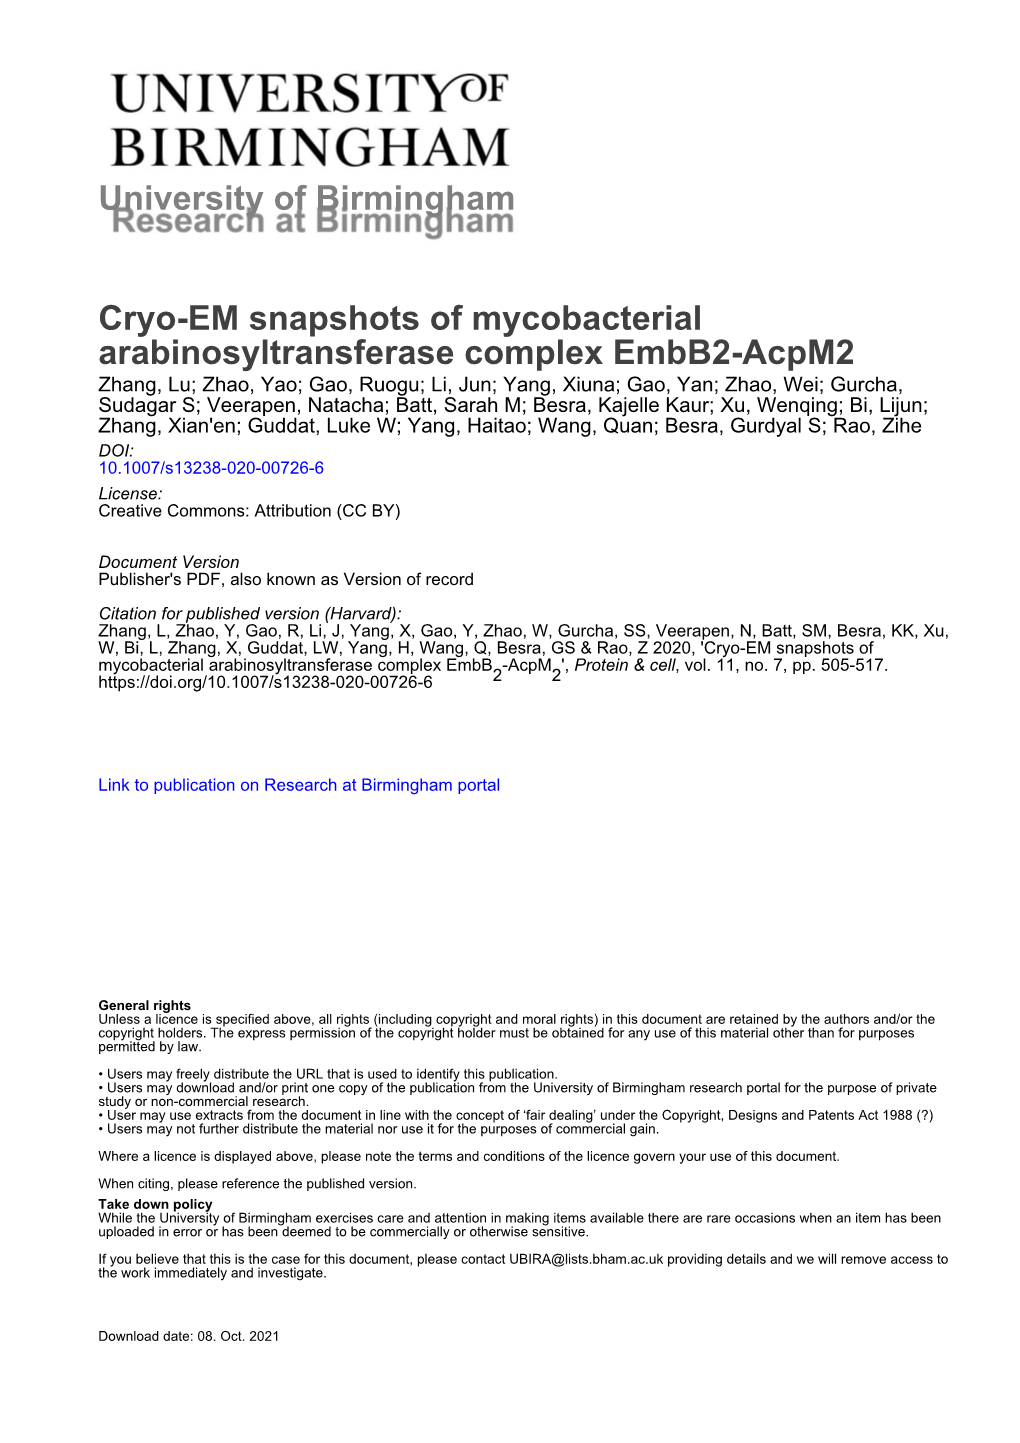 Cryo-EM Snapshots of Mycobacterial Arabinosyltransferase